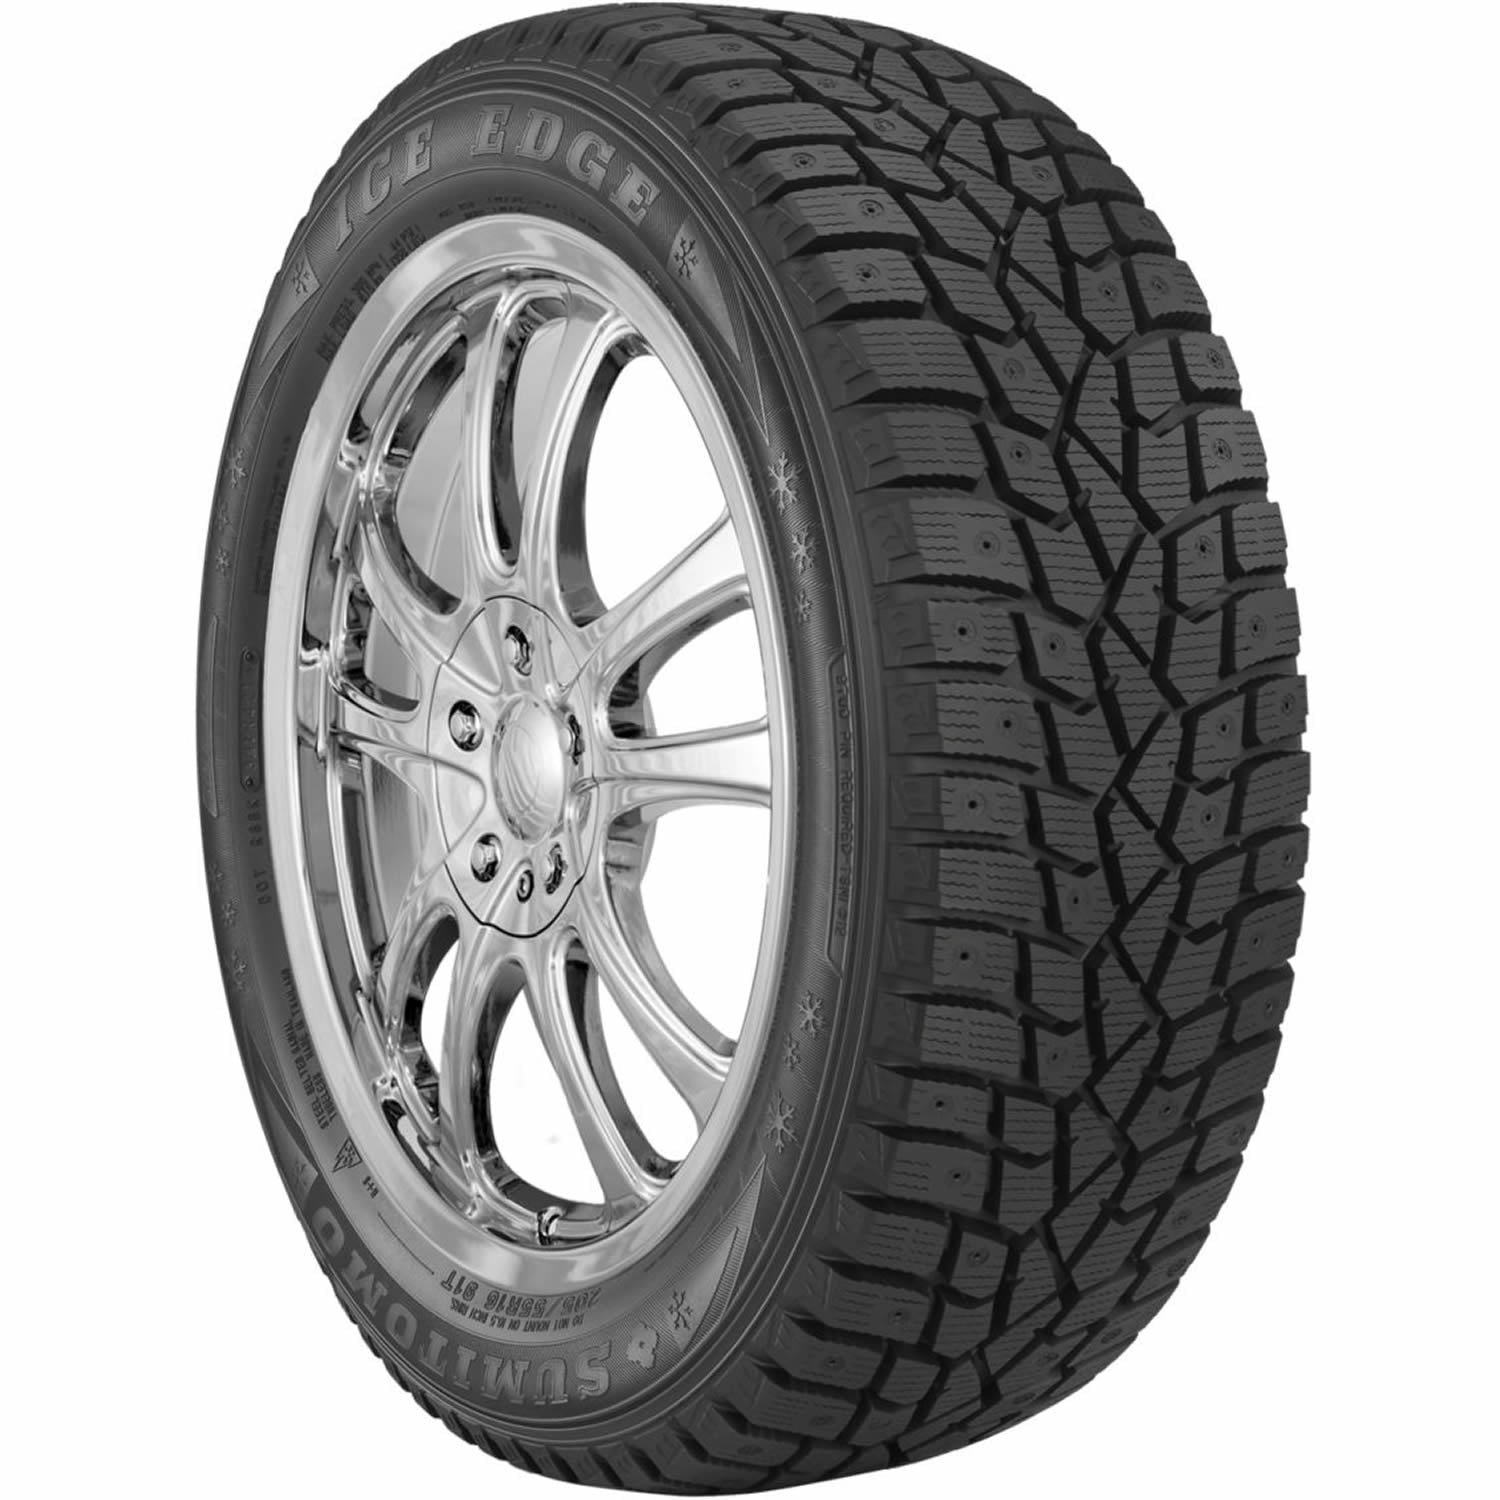 SUMITOMO ICE EDGE 265/50R20 (30.9X10.6R 20) Tires